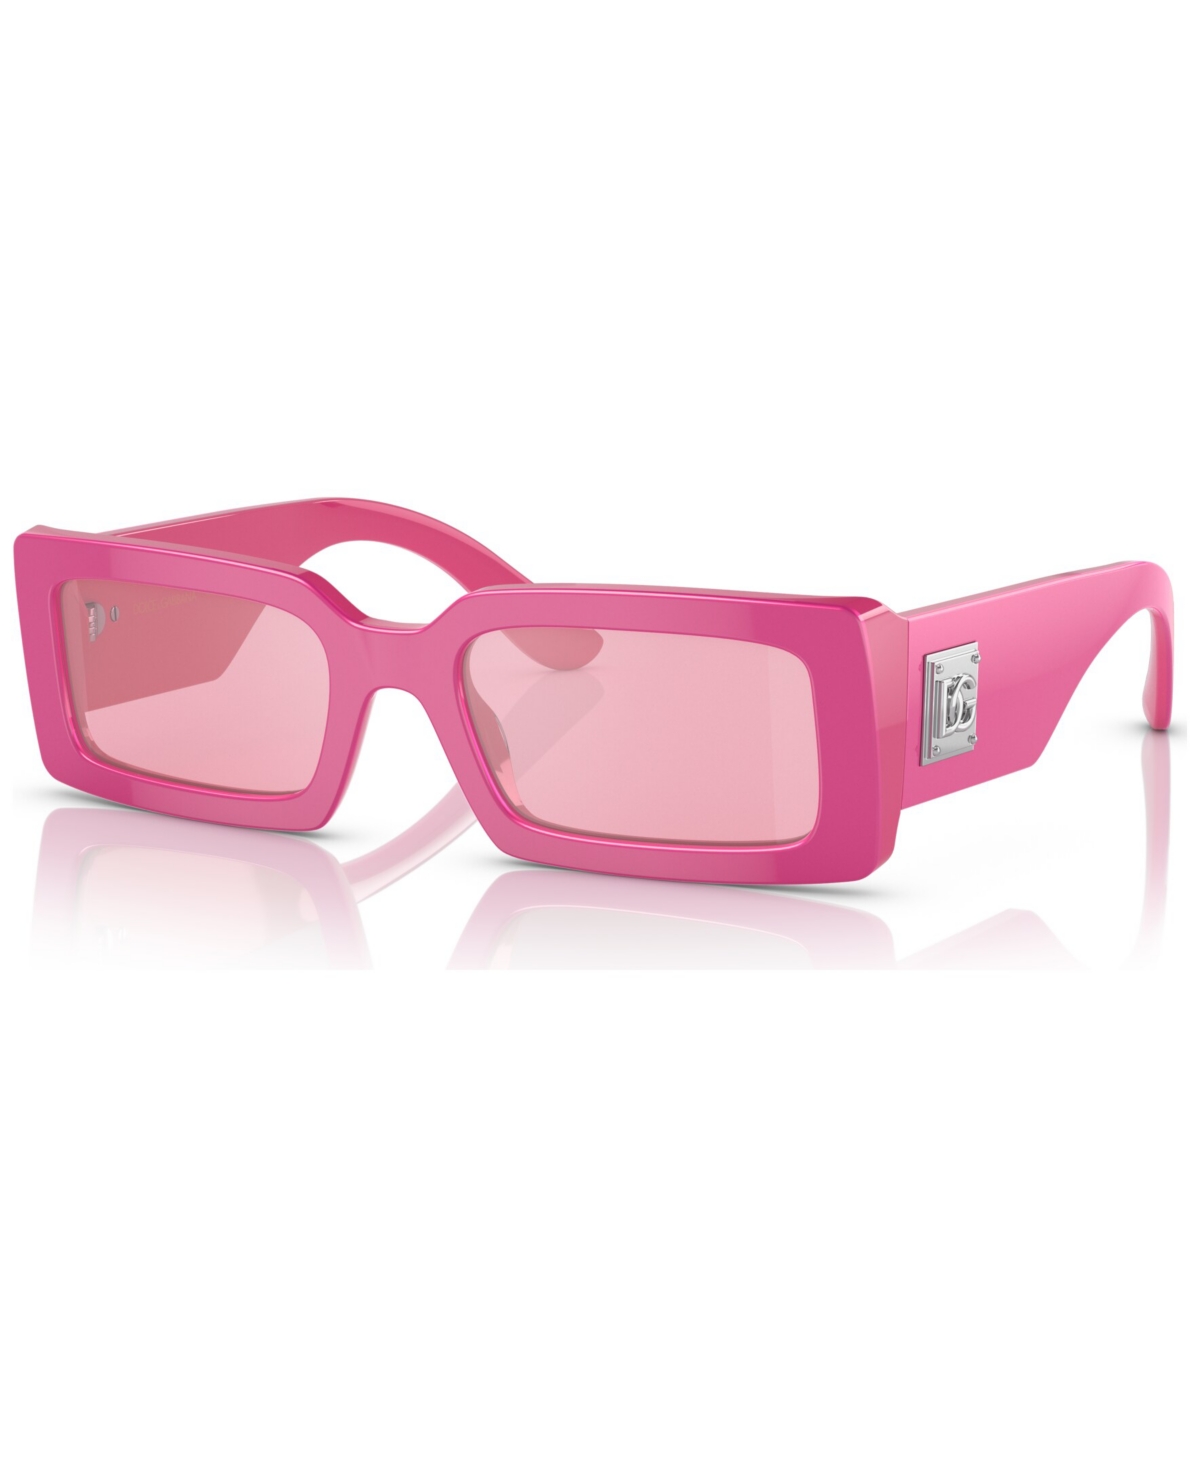 Dolce&Gabbana Women's Sunglasses, DG4416 - Metallic Pink